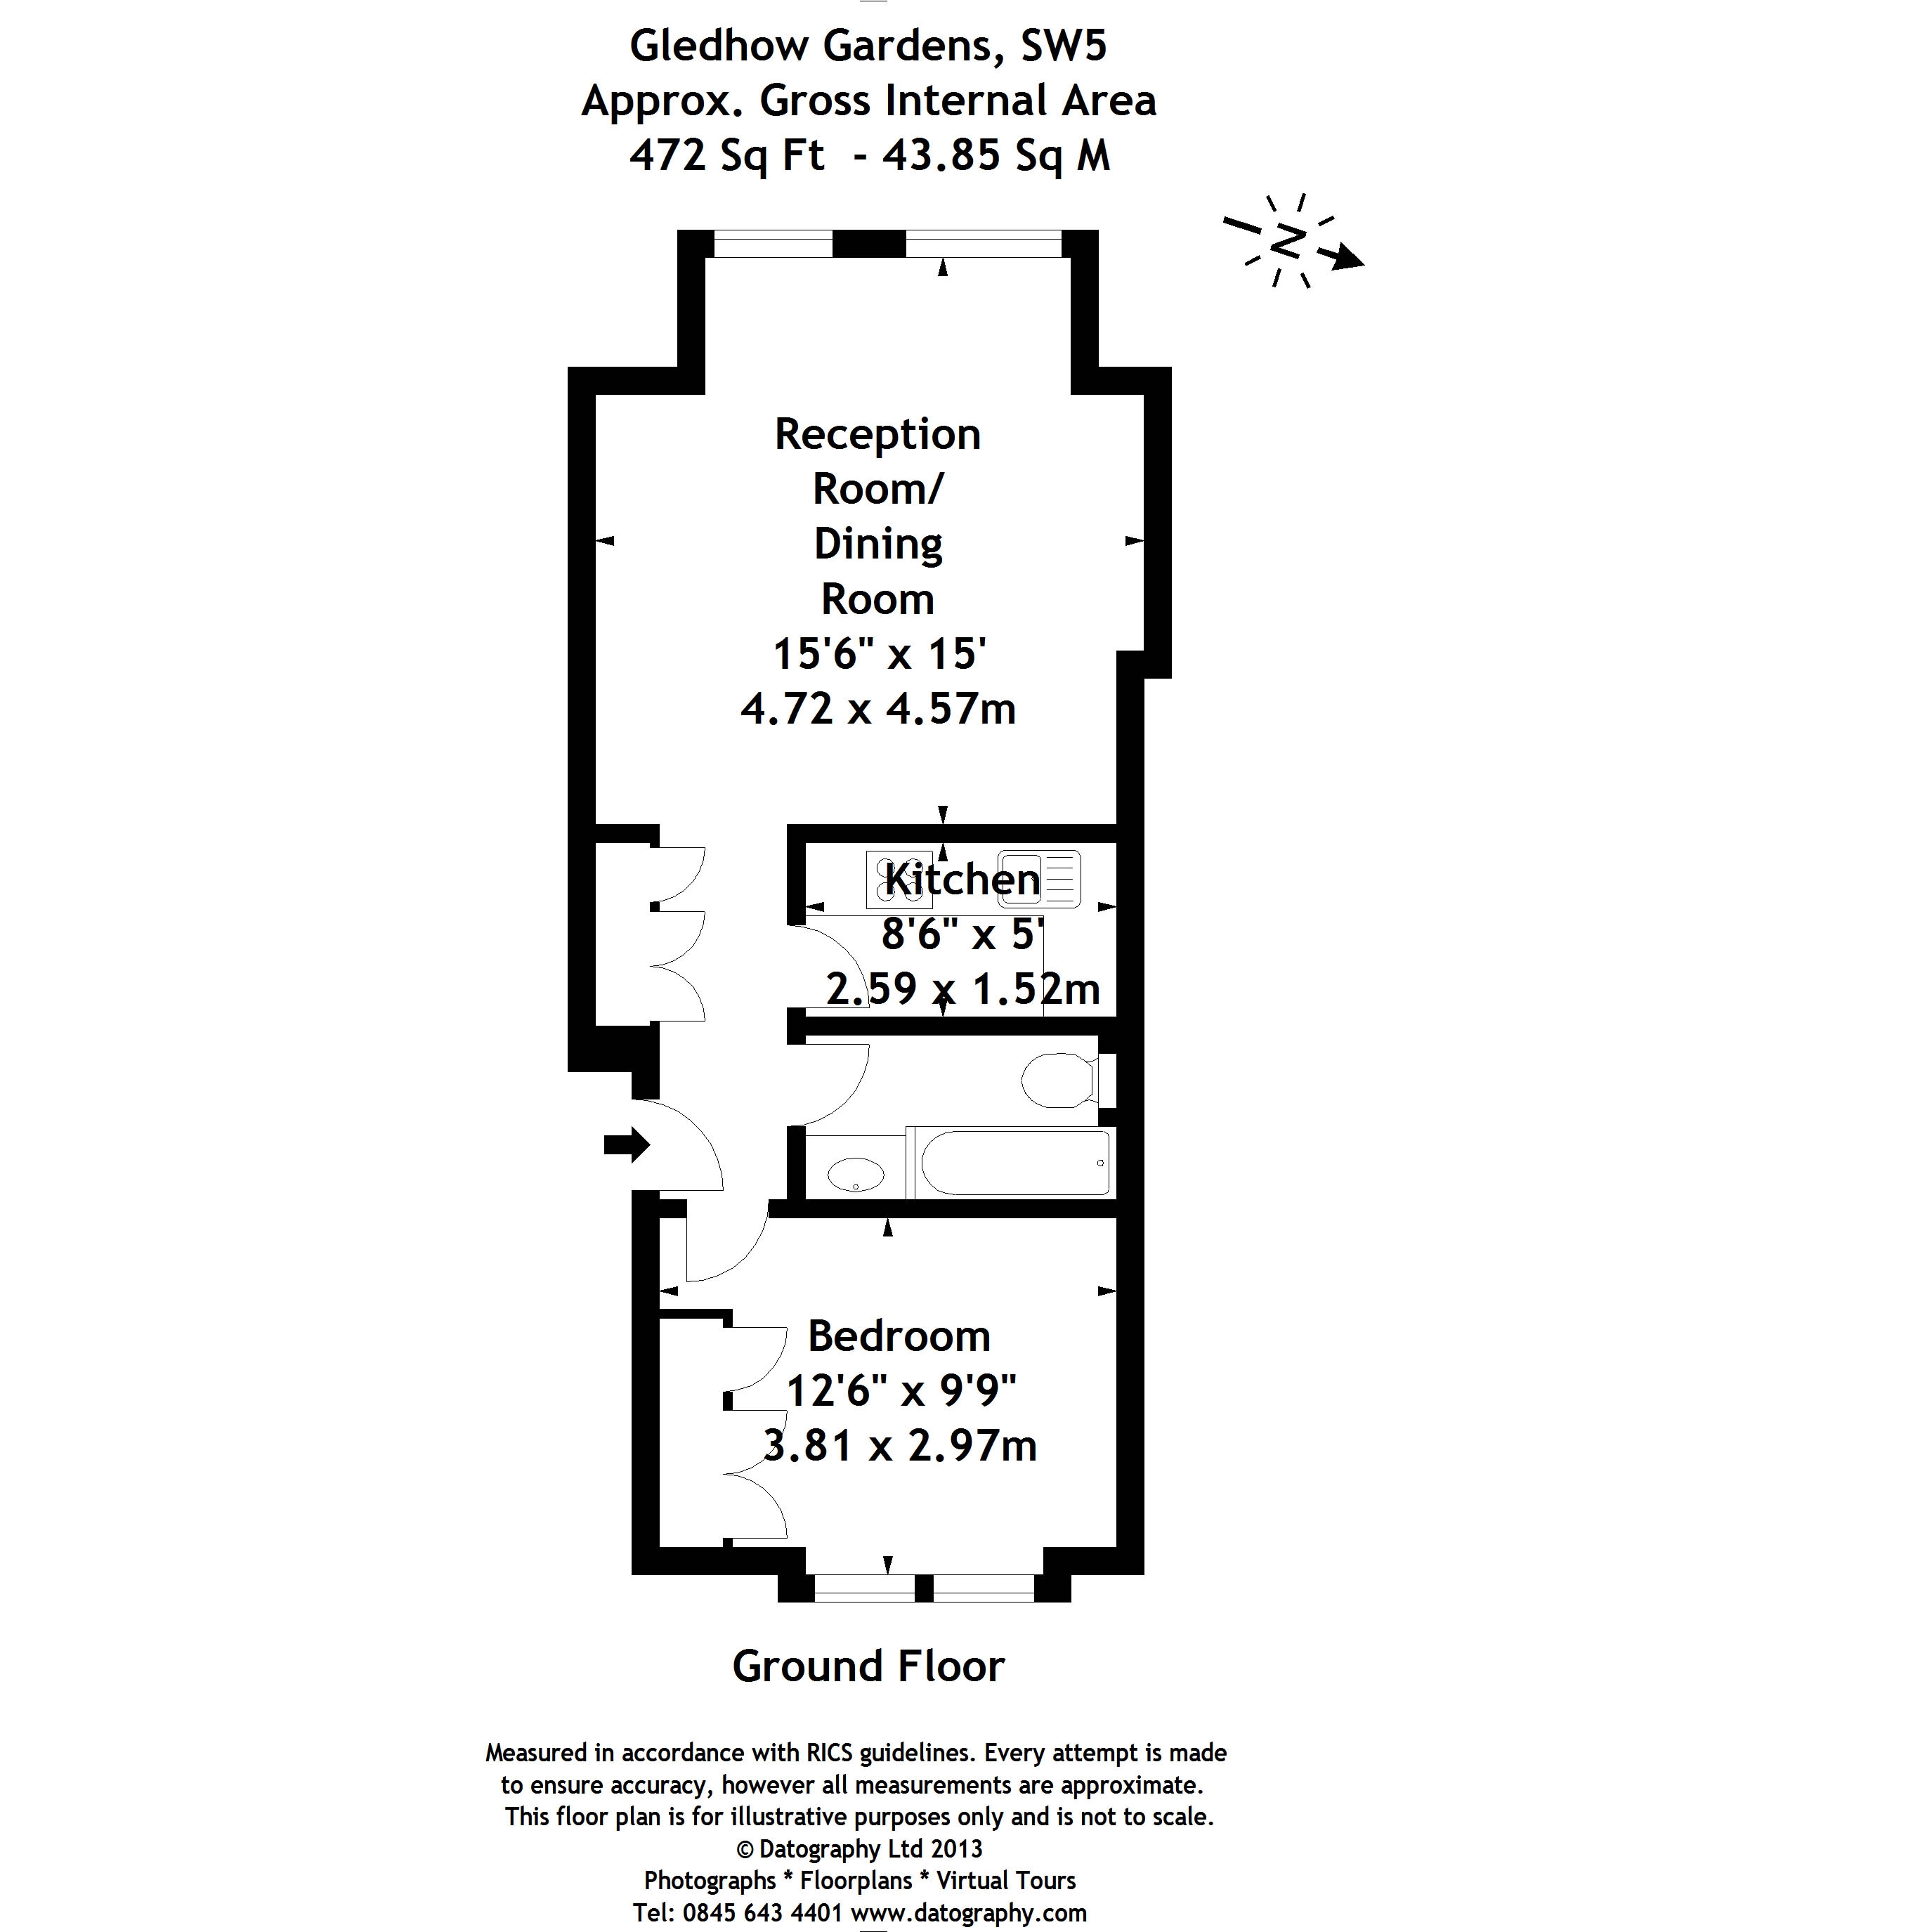 1 Bedrooms Flat to rent in Gledhow Gardens, South Kensington SW5